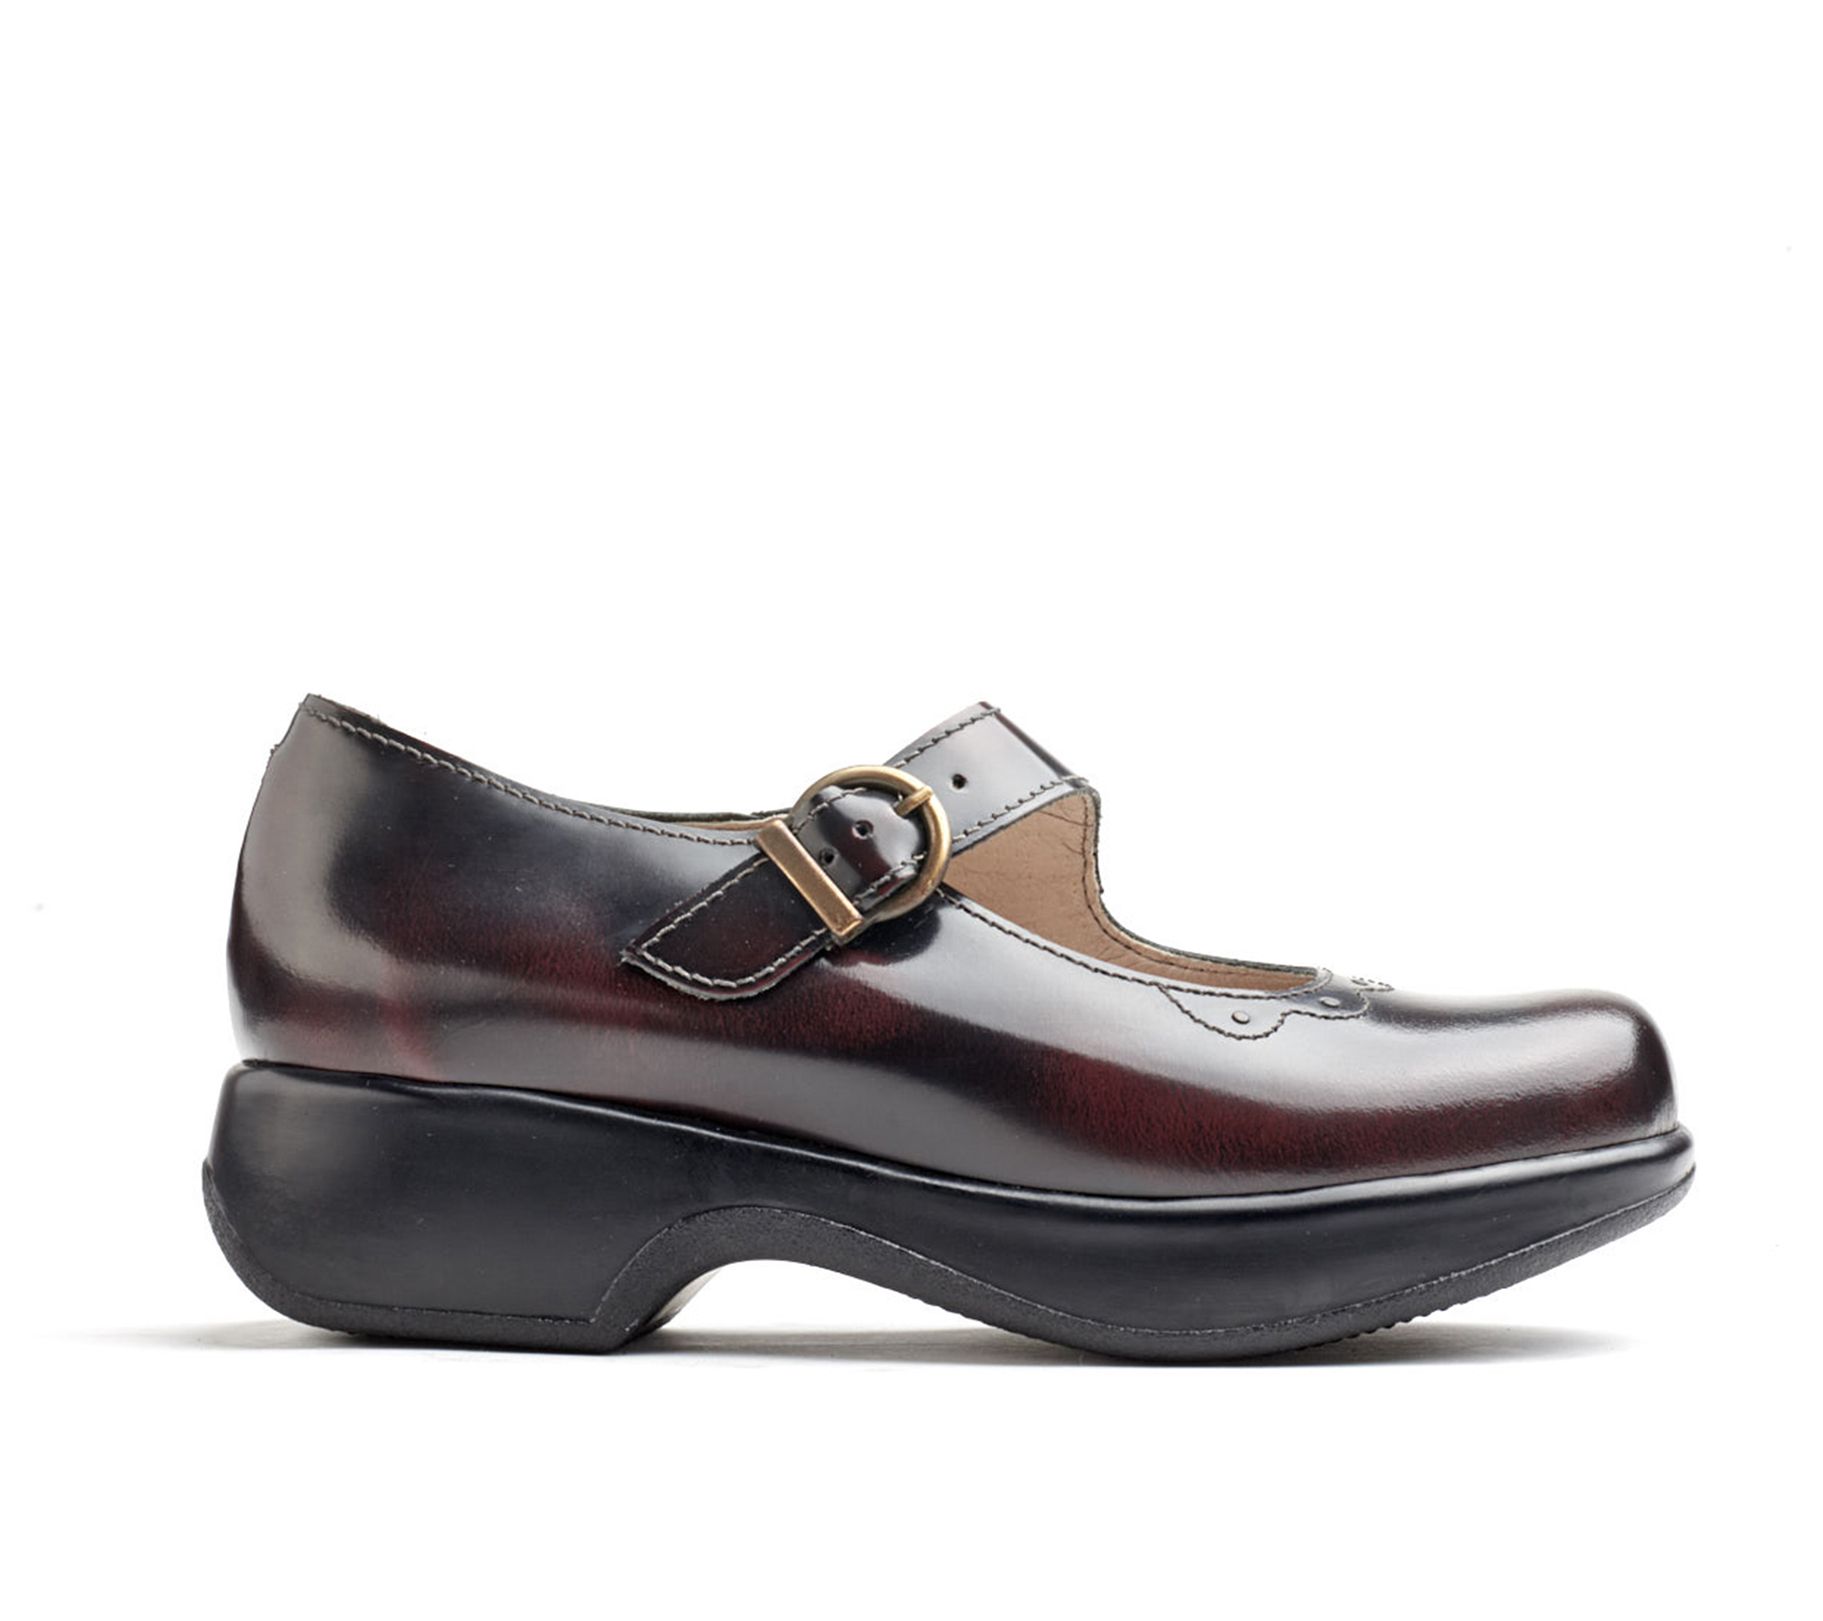 Dromedaris Leather Mary Jane Shoes - Selma - QVC.com